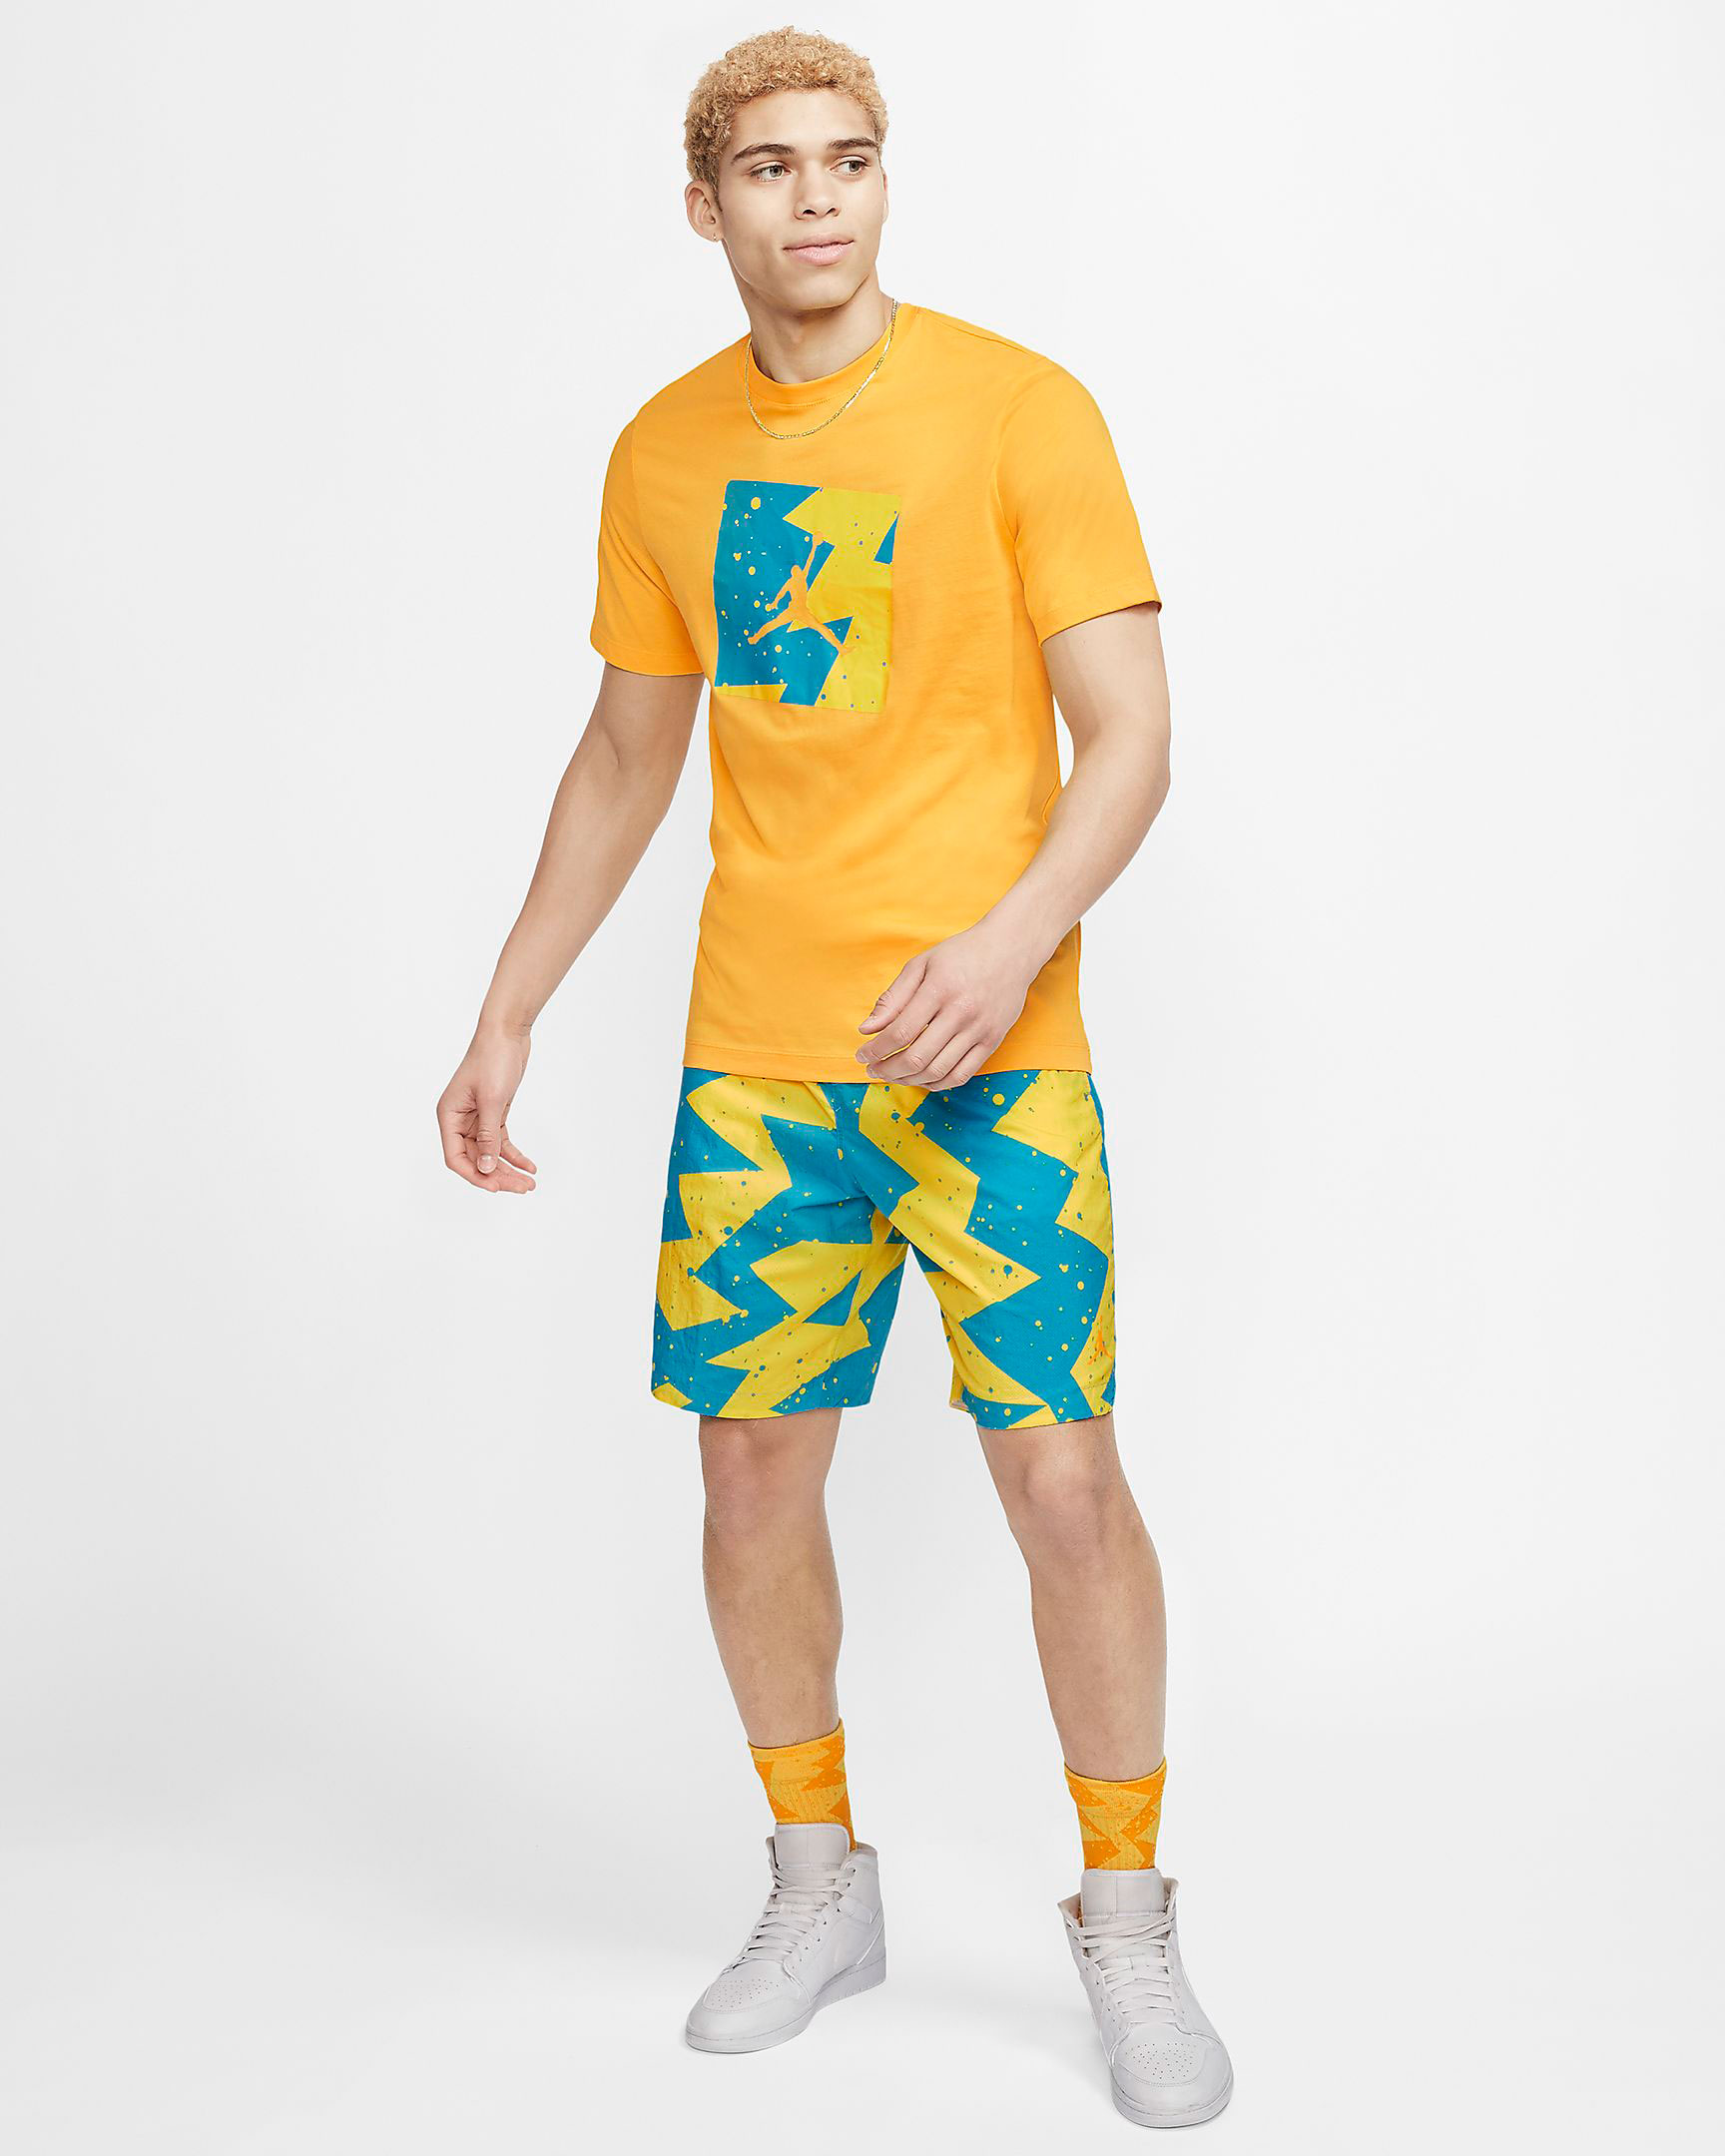 jordan-laser-blue-yellow-sneaker-outfit